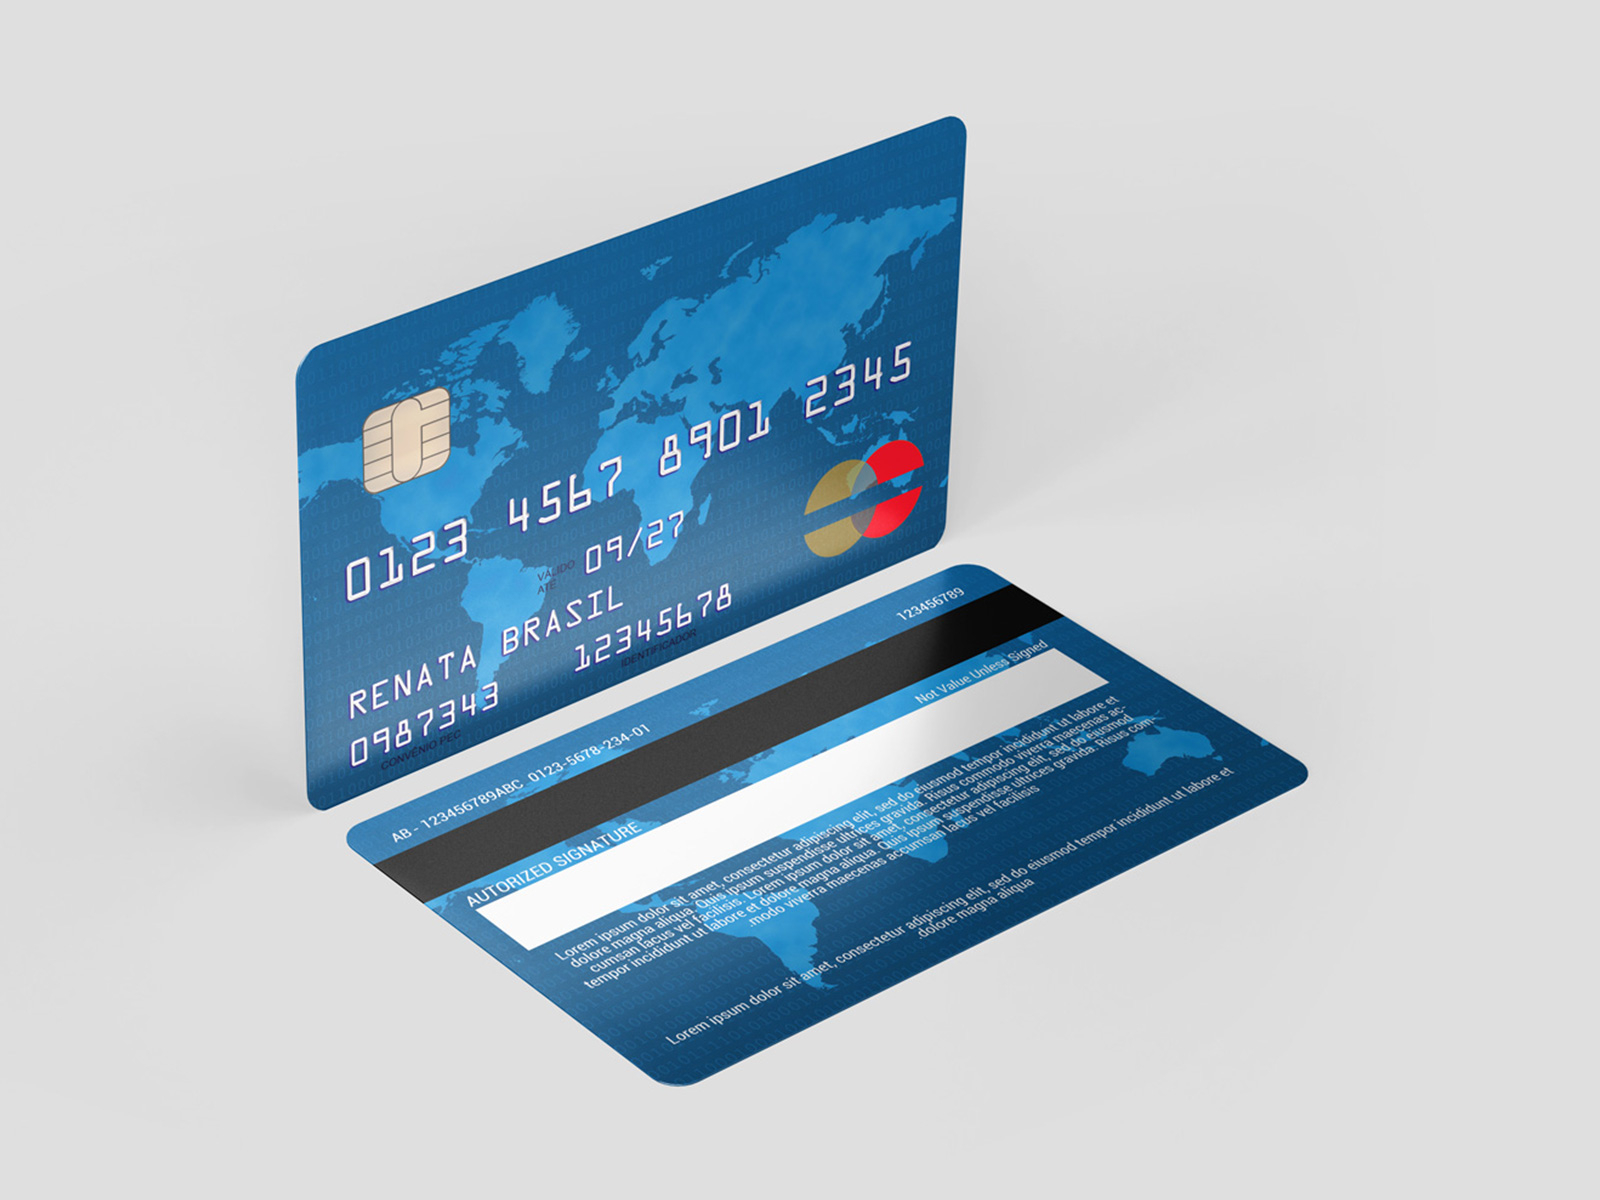 Download Credit Debit Gift Card Mockup By Mostafa Absalan On Dribbble PSD Mockup Templates